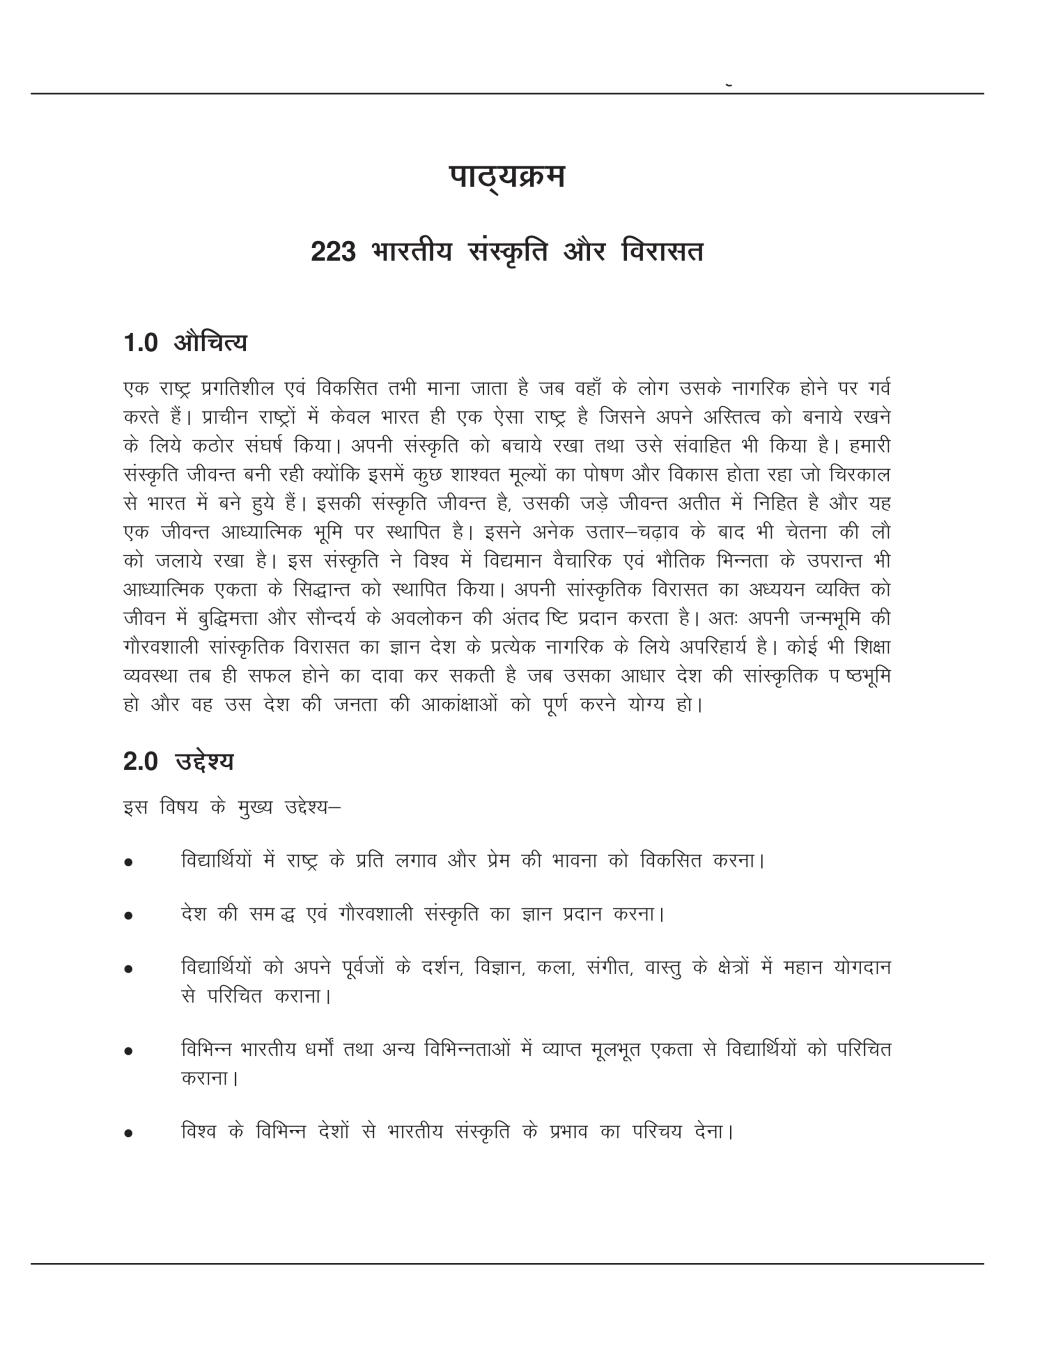 NIOS Class 10 Syllabus - Indian culture and Heritage (Hindi Medium) - Page 1